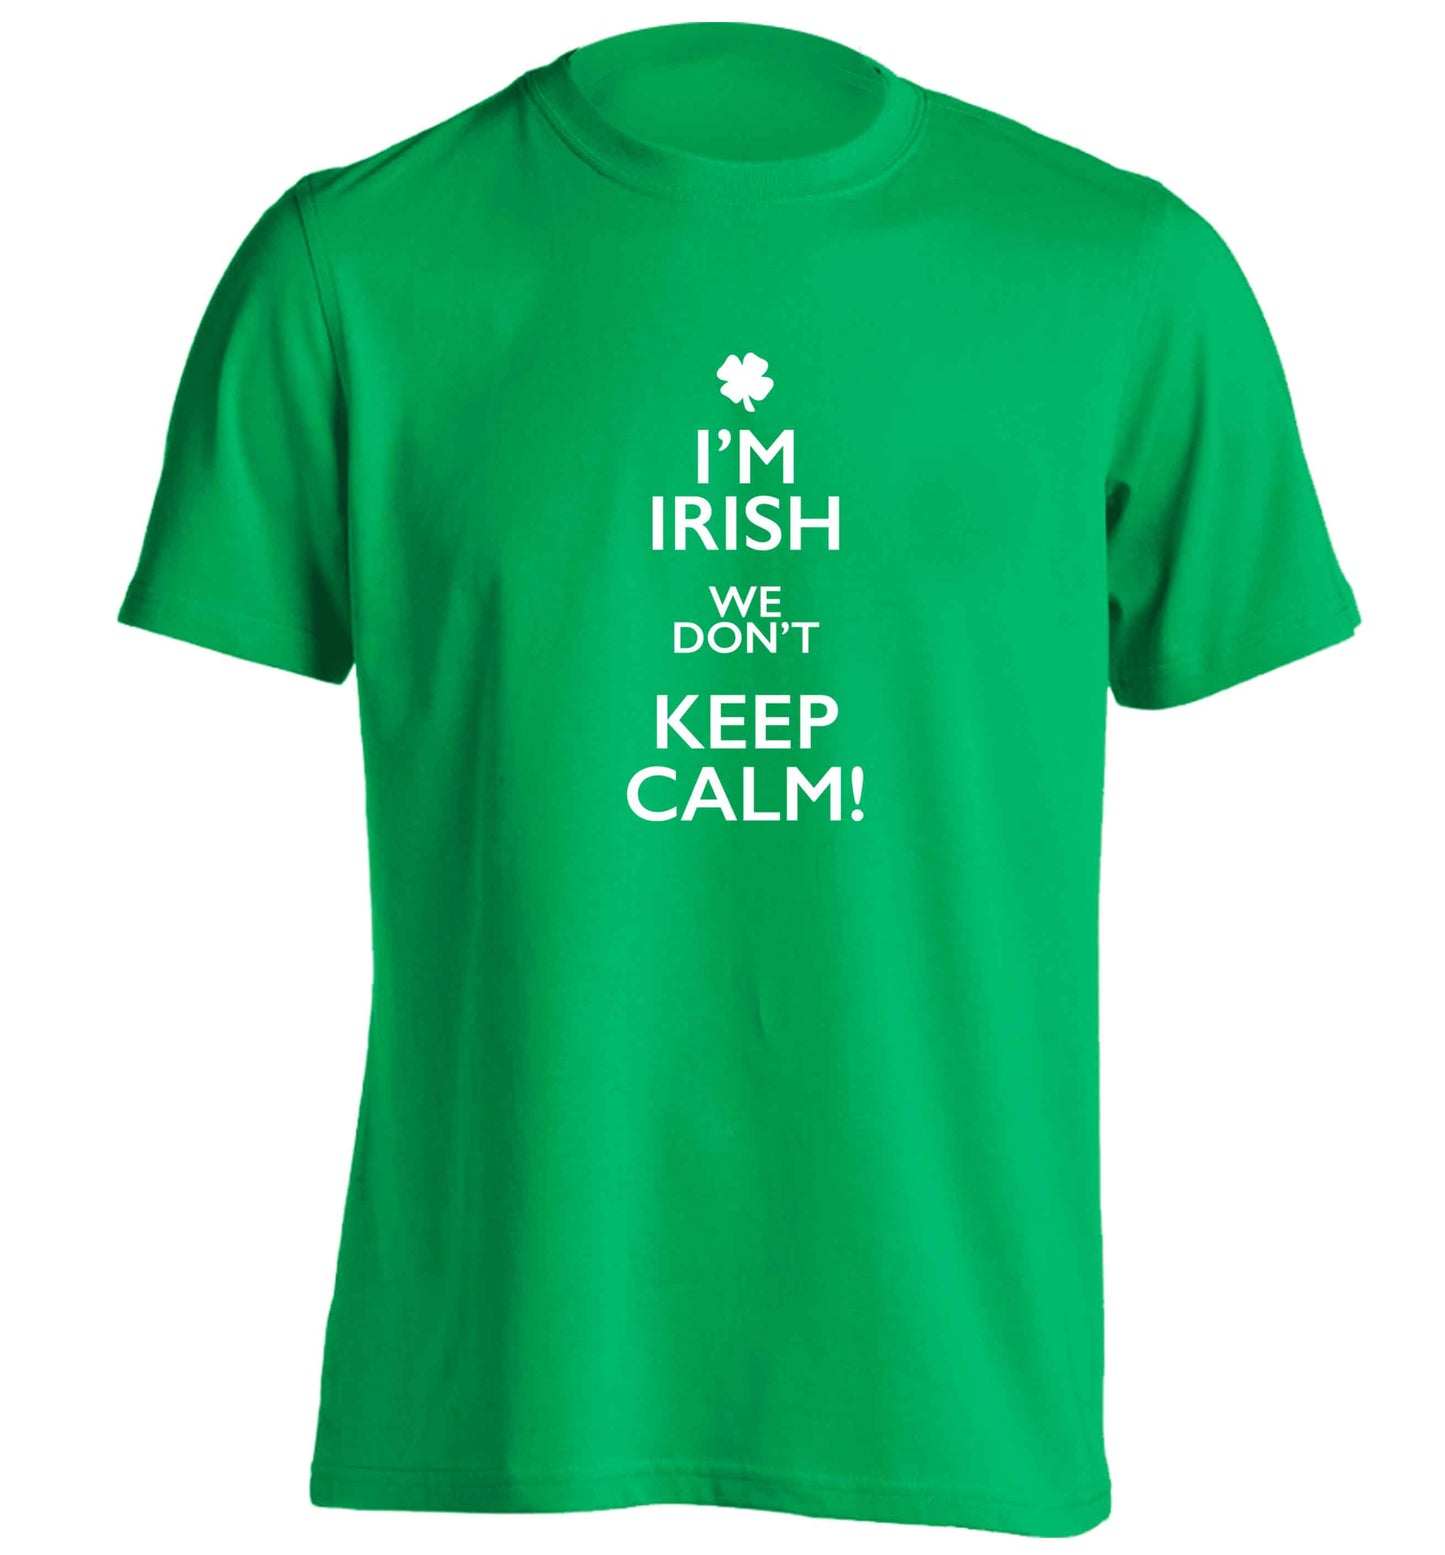 I'm Irish we don't keep calm adults unisex green Tshirt 2XL